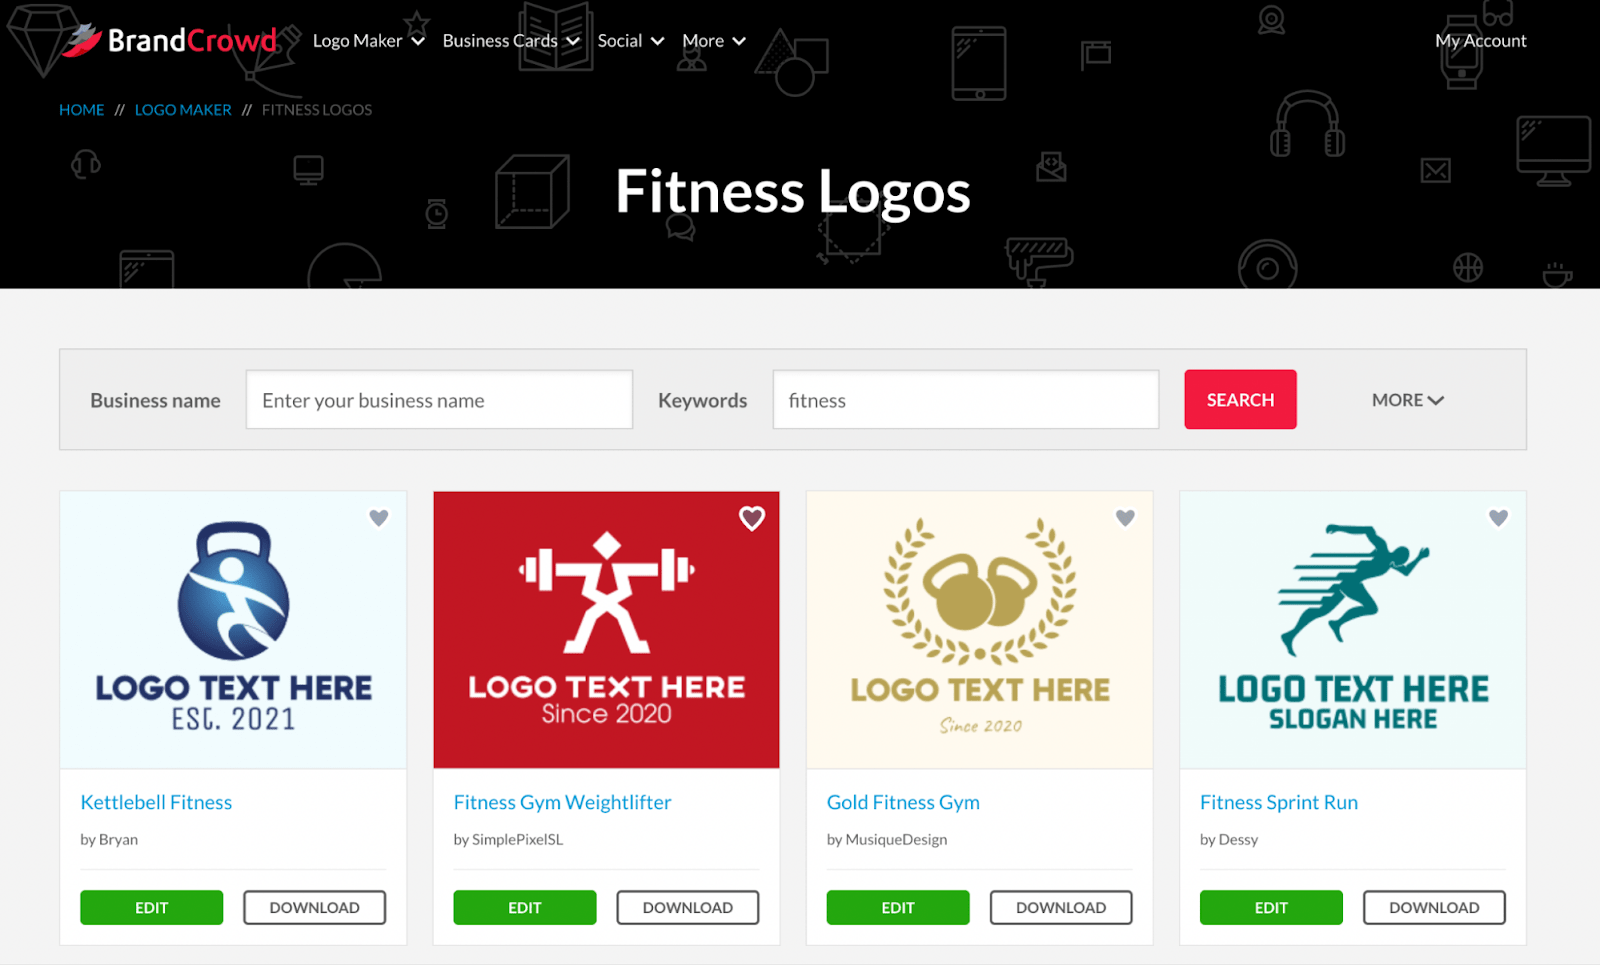 Fitness logos in grid format 